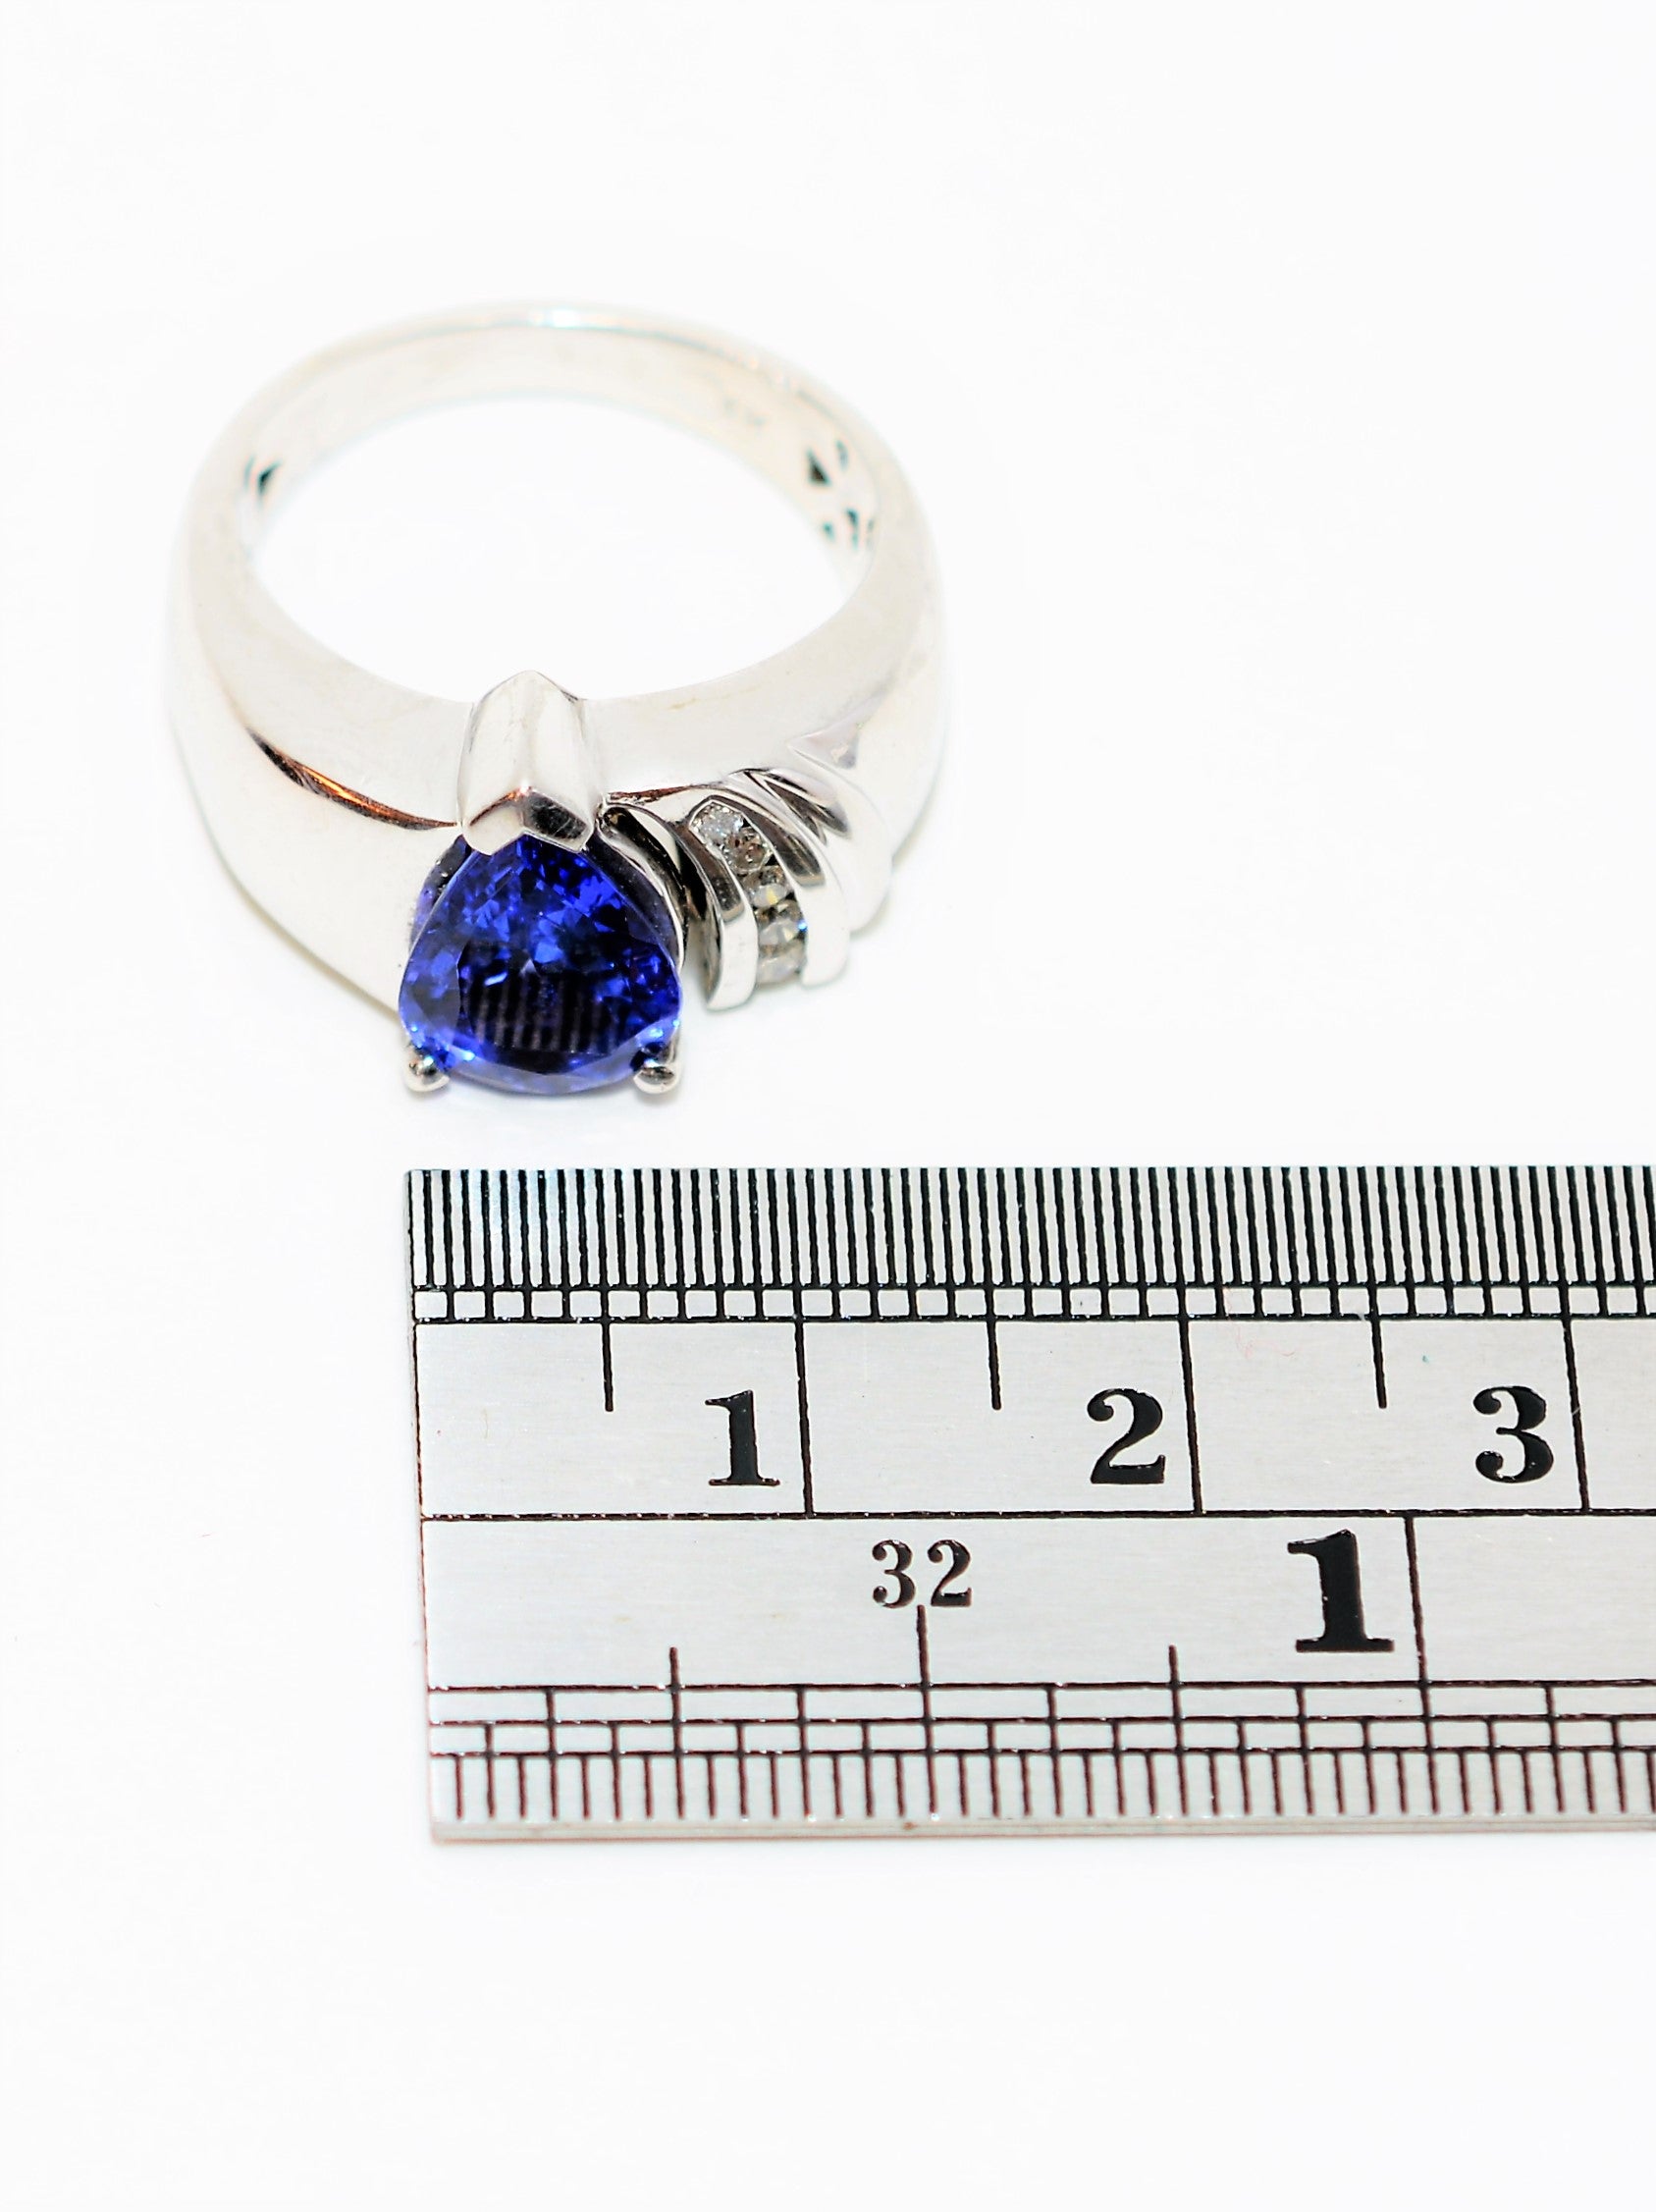 Natural D'Block Tanzanite & Diamond Ring 14K Solid White Gold 1.91tcw Bold Gemstone Pear Cut Fine Vintage Estate Jewelry